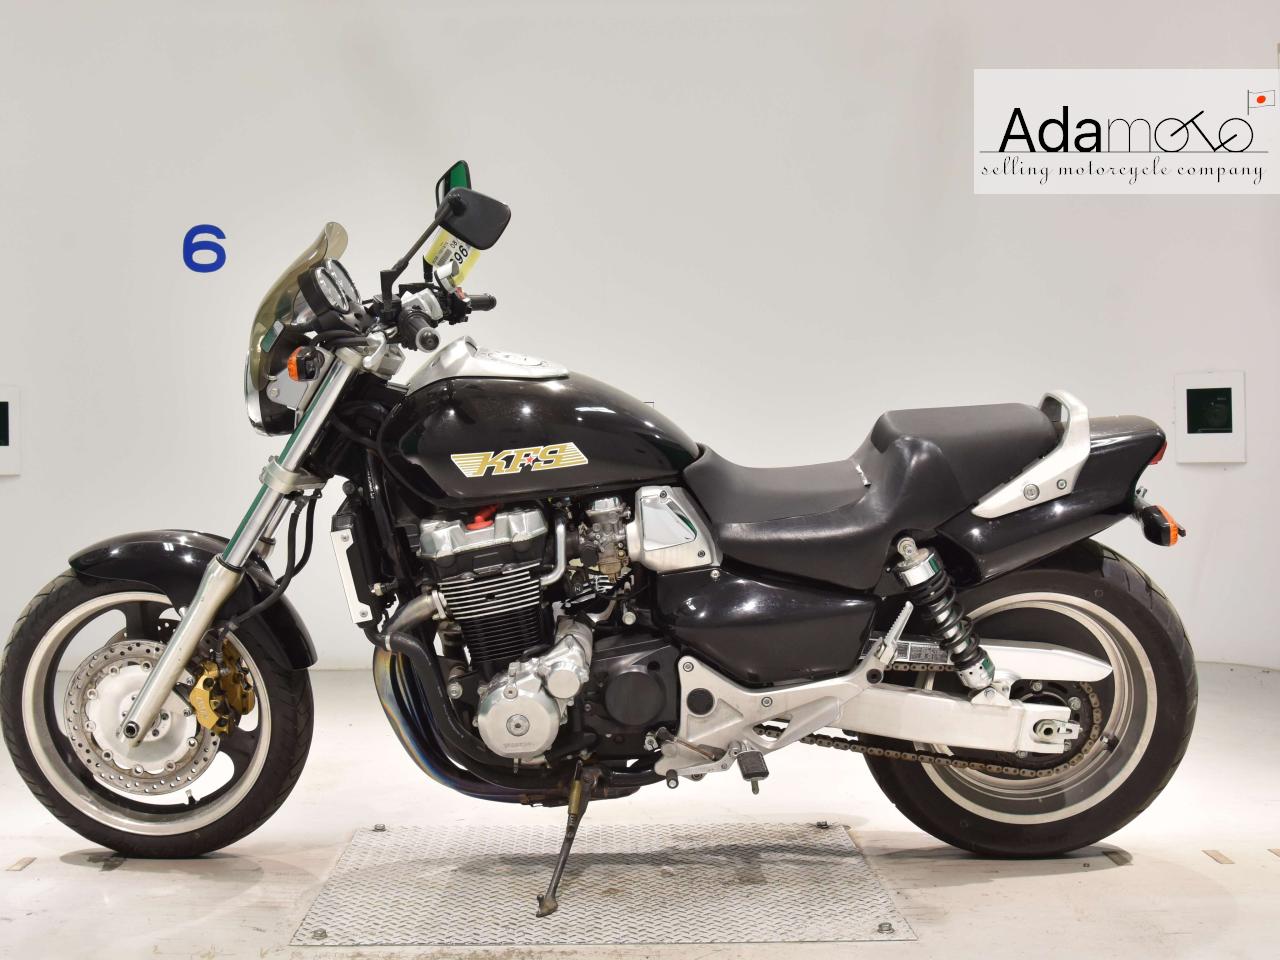 Honda X4 - Adamoto - Motorcycles from Japan